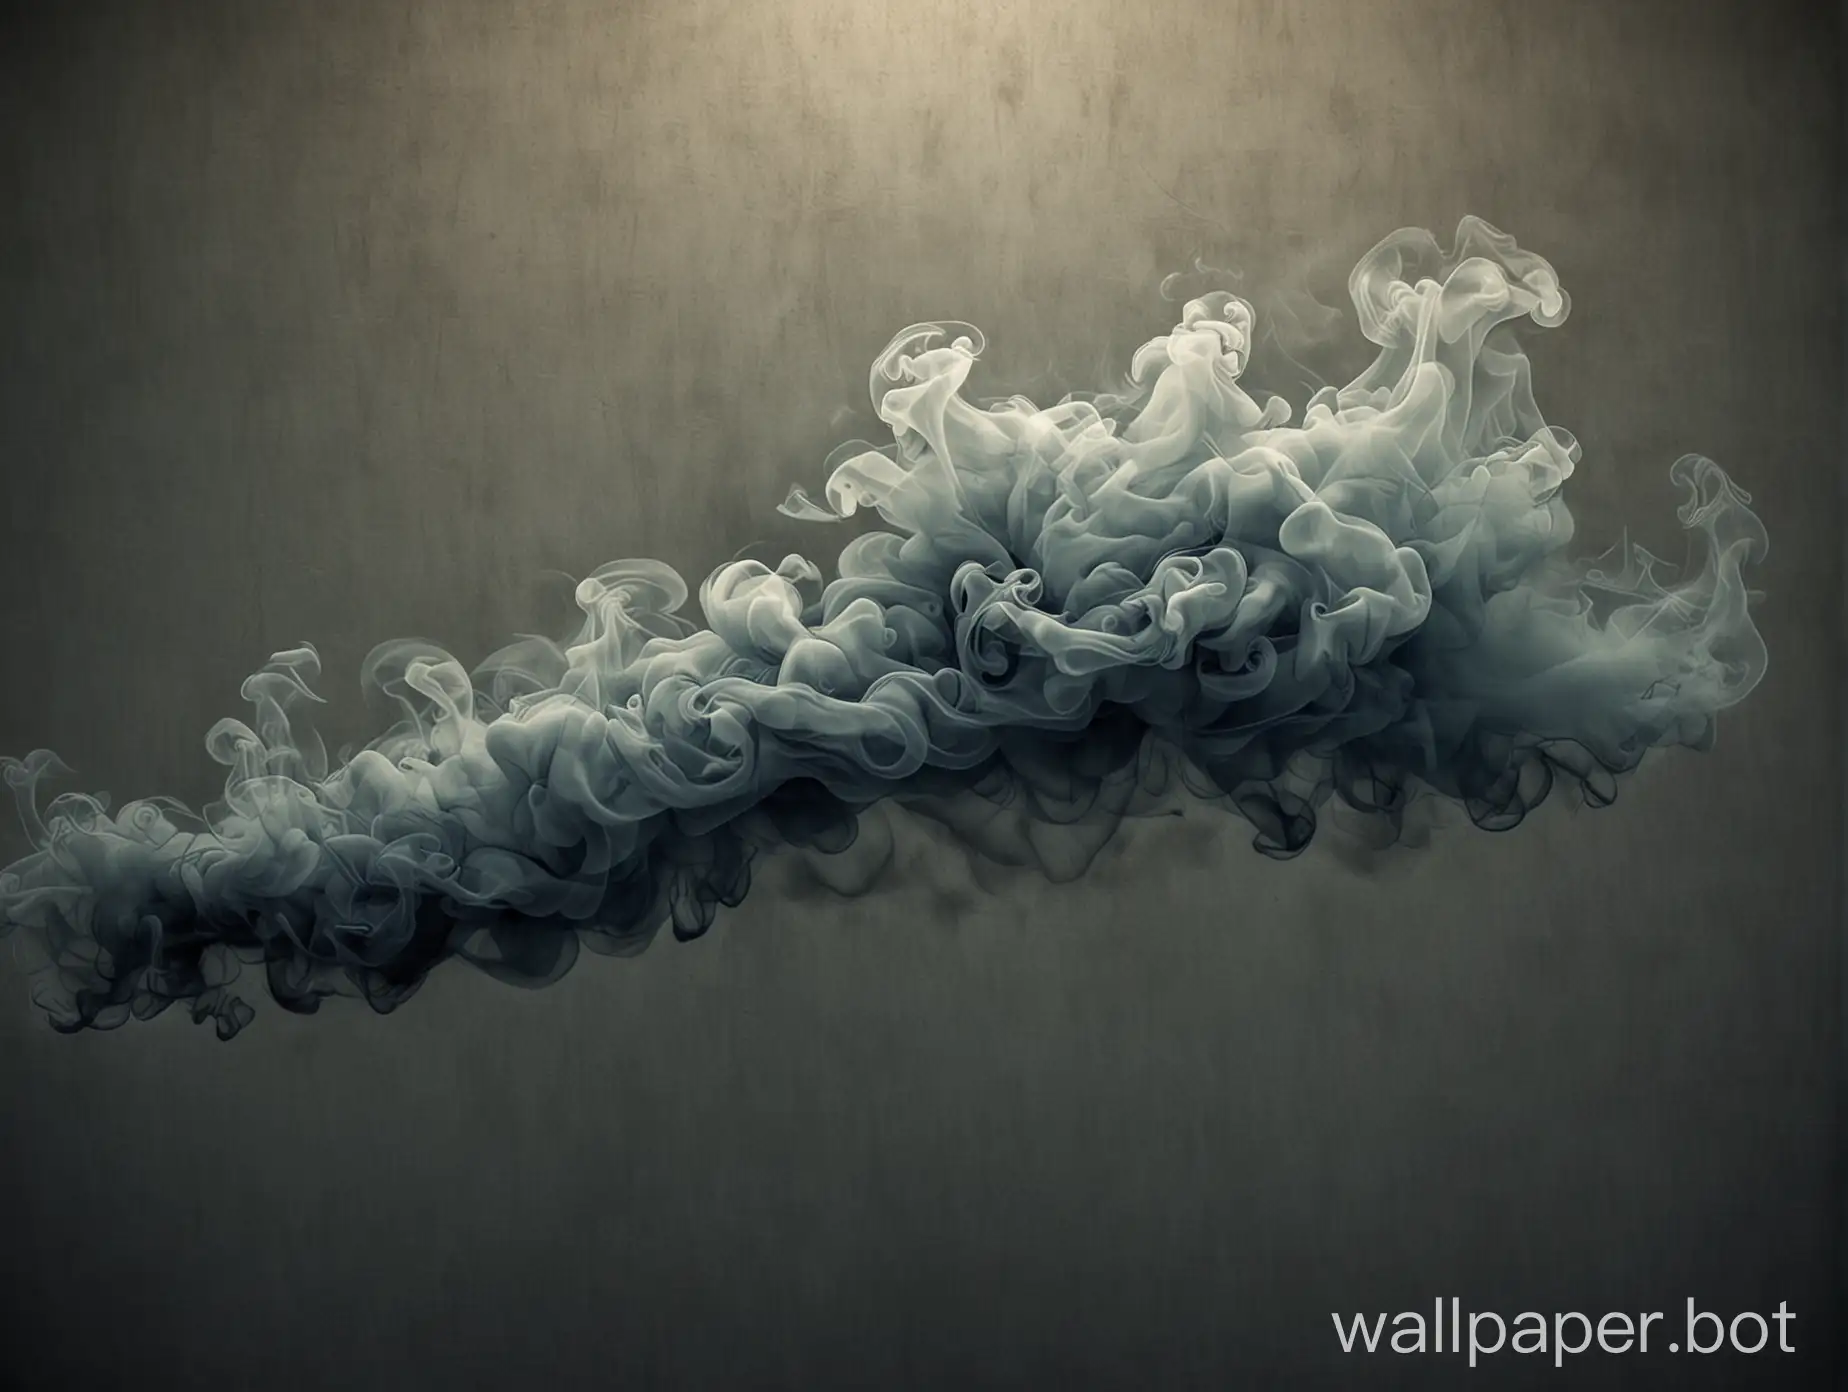 create a wallpaper of a smokey background